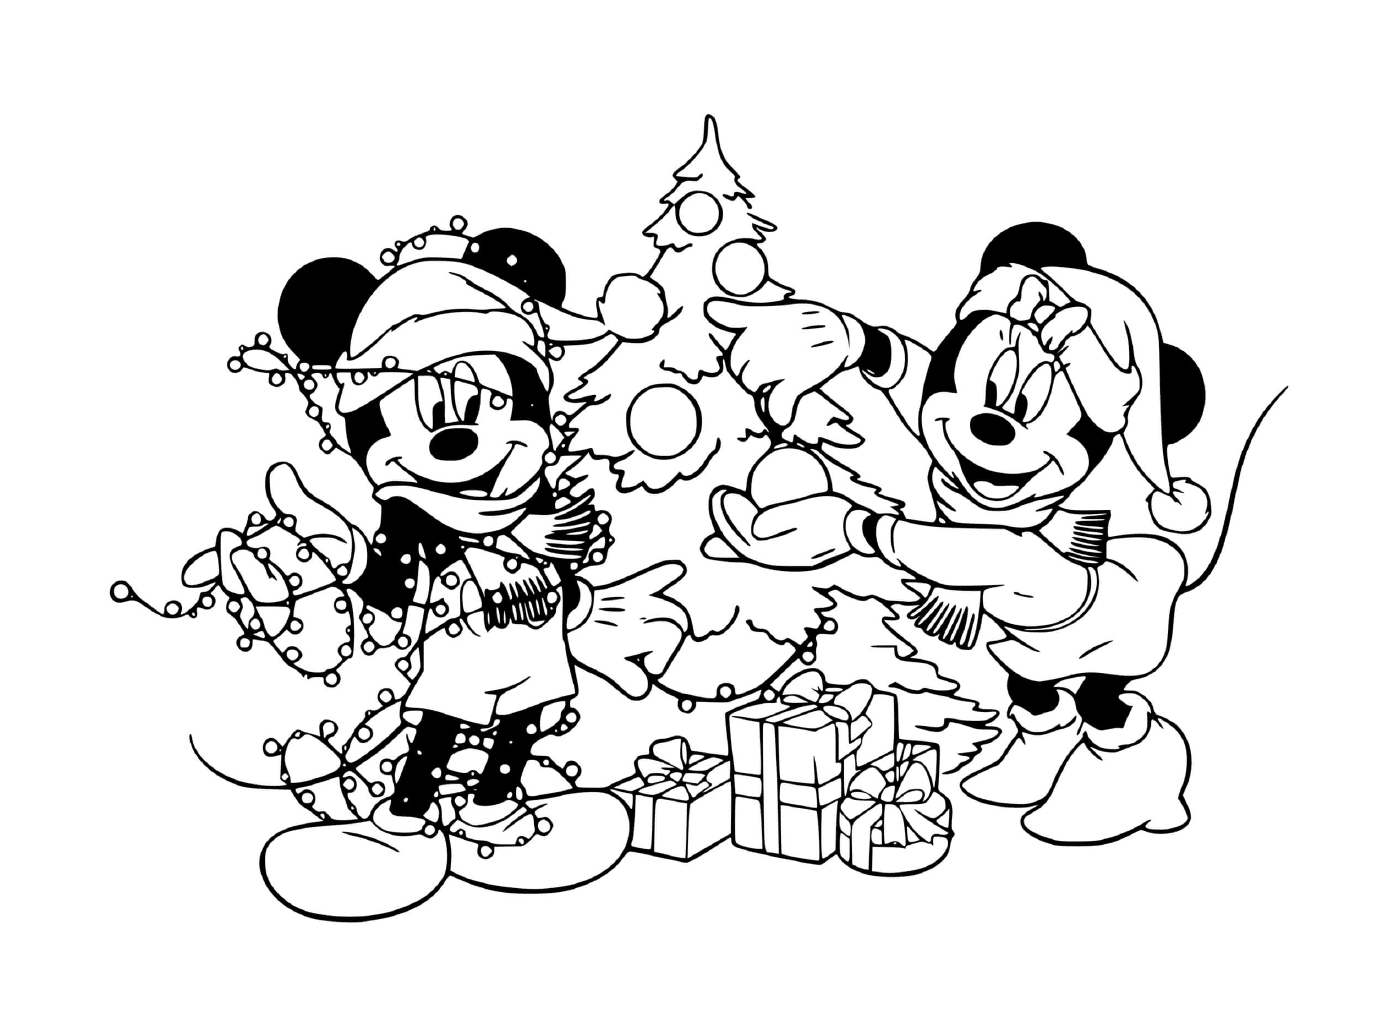  Mickey e Minnie decoram 